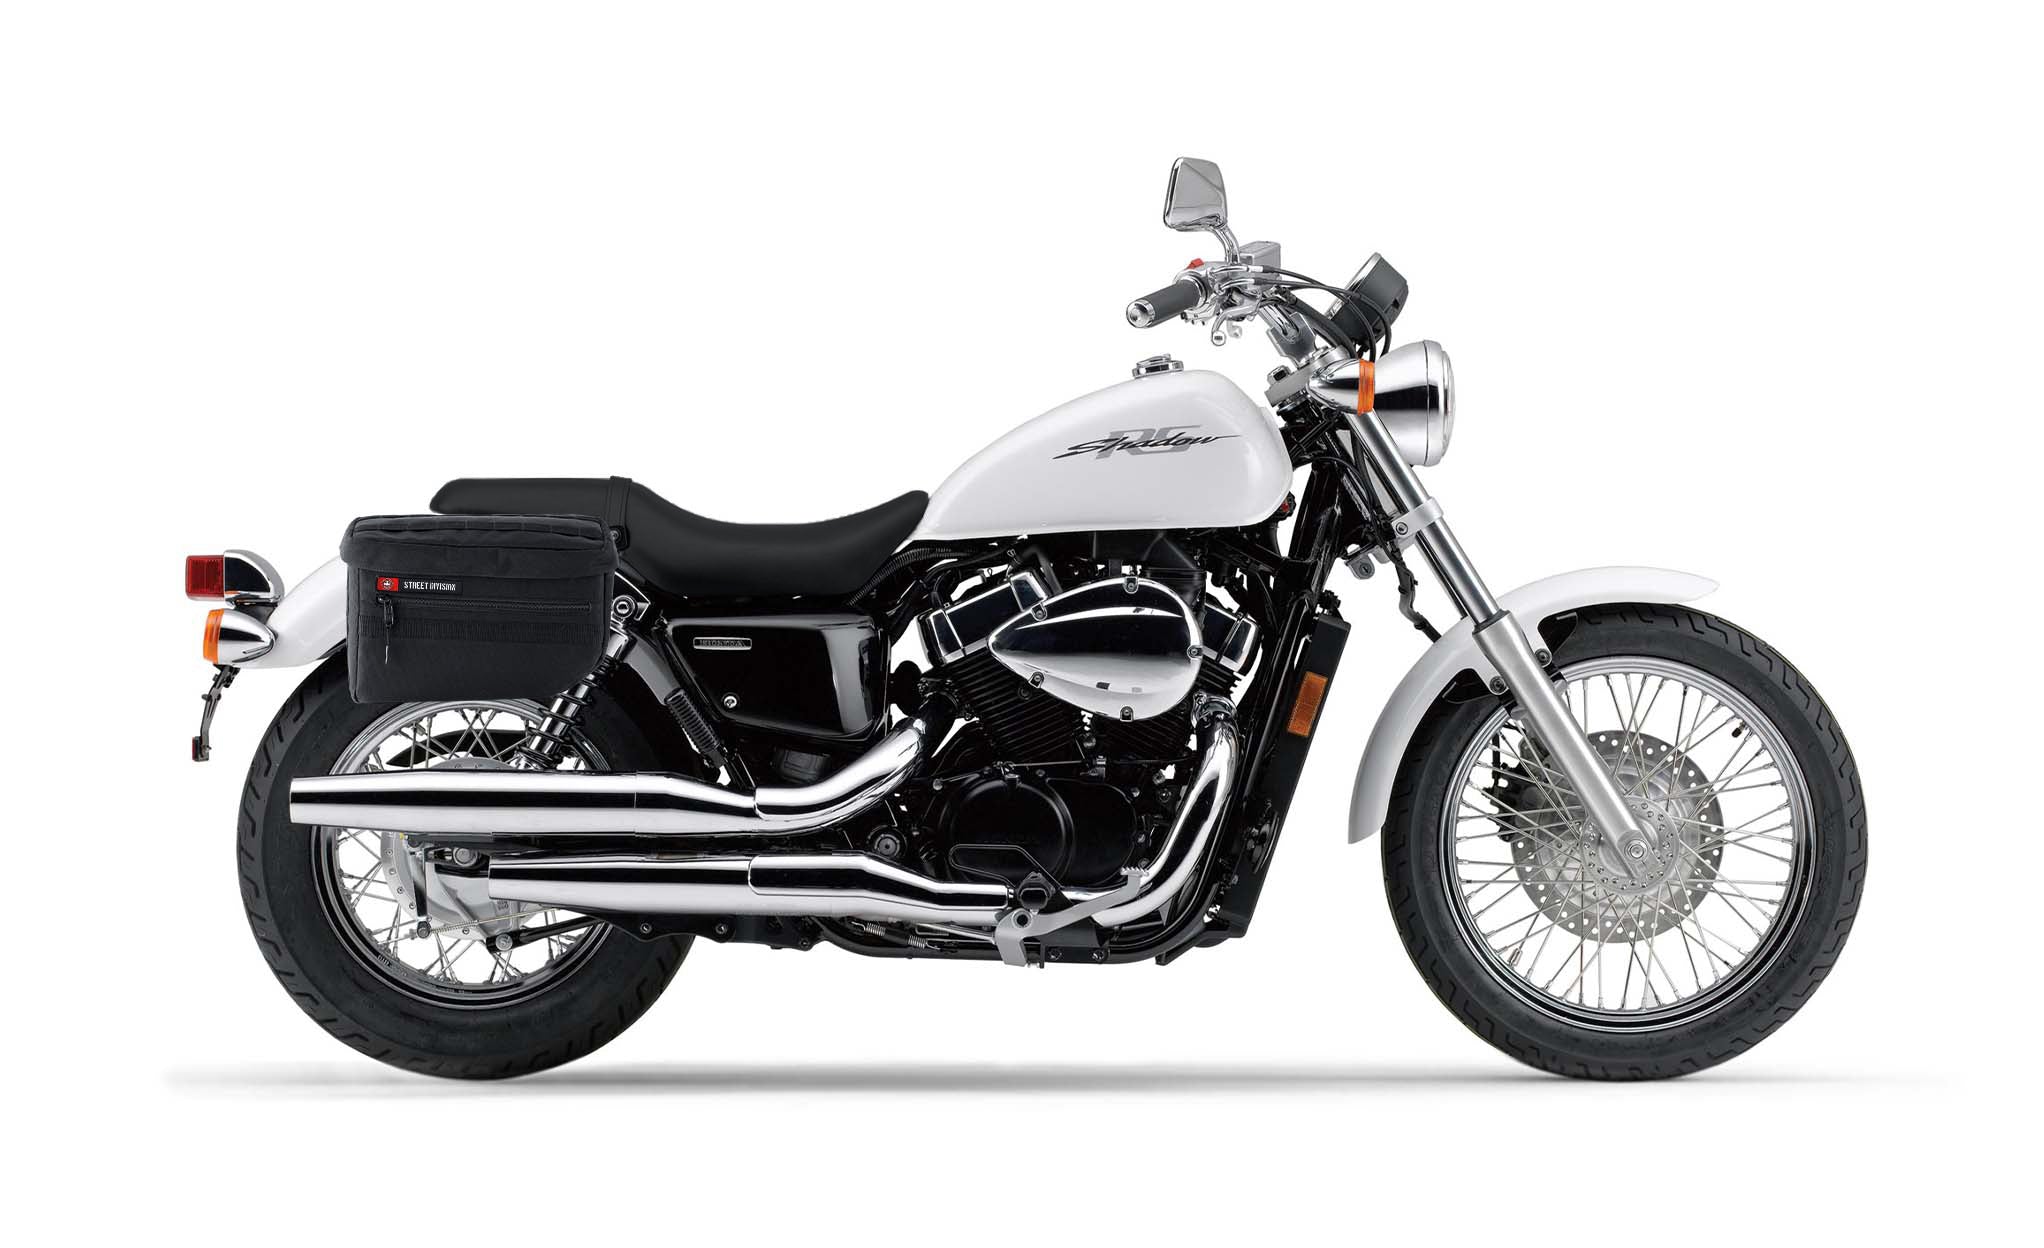 Viking Patriot Large Honda Shadow 750 Rs Motorcycle Throw Over Saddlebags on Bike Photo @expand